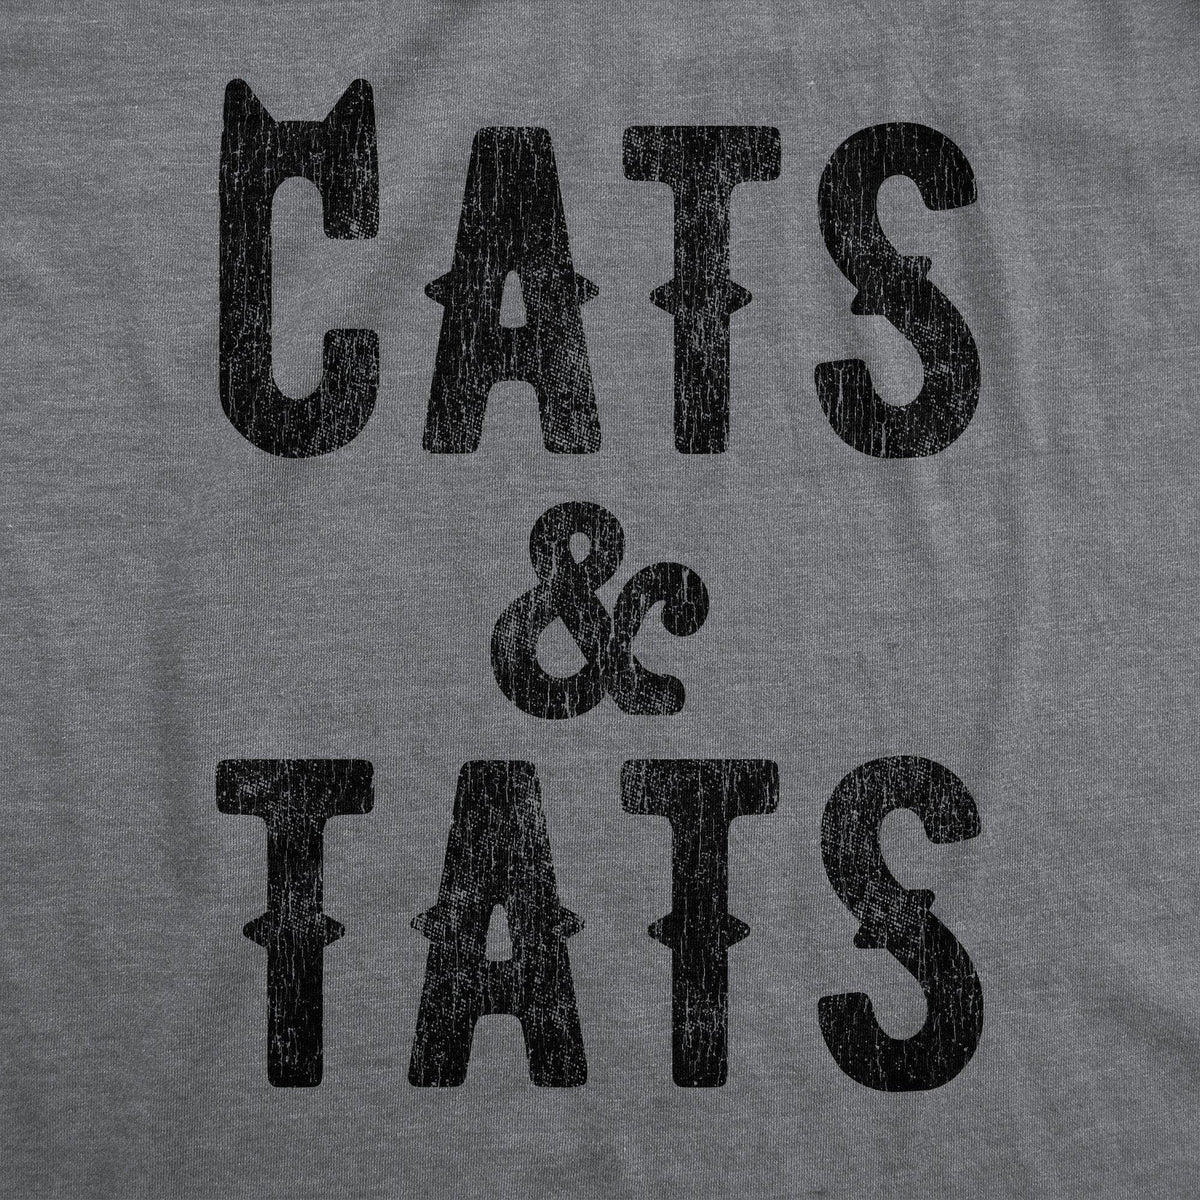 Cats And Tats Women&#39;s Tshirt - Crazy Dog T-Shirts